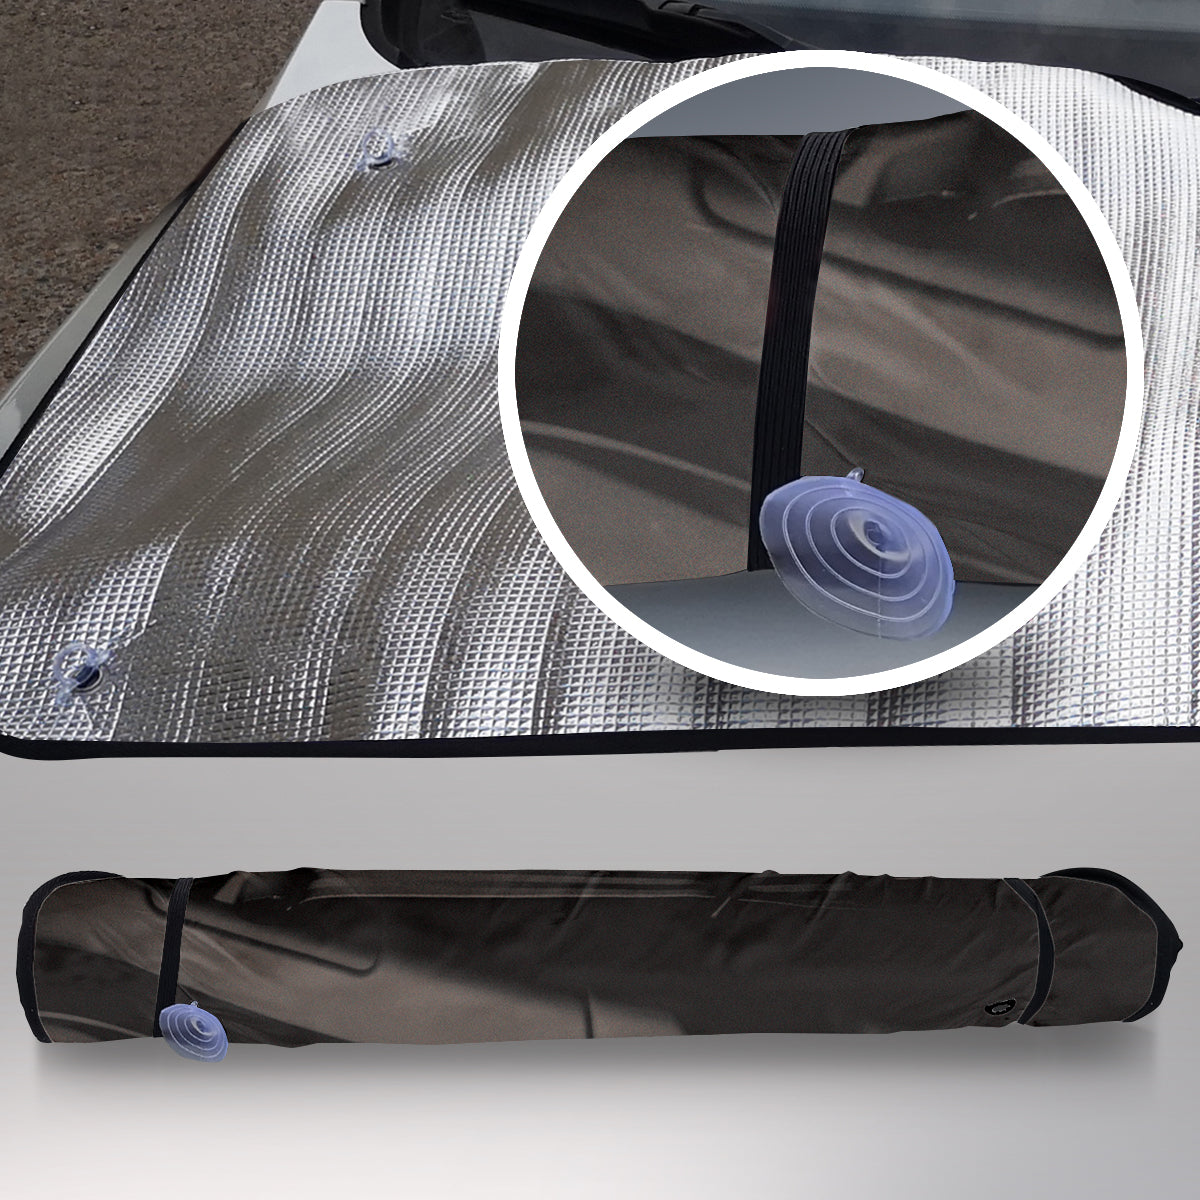 > Sleeping Pads > Car sunshade sleeping pad